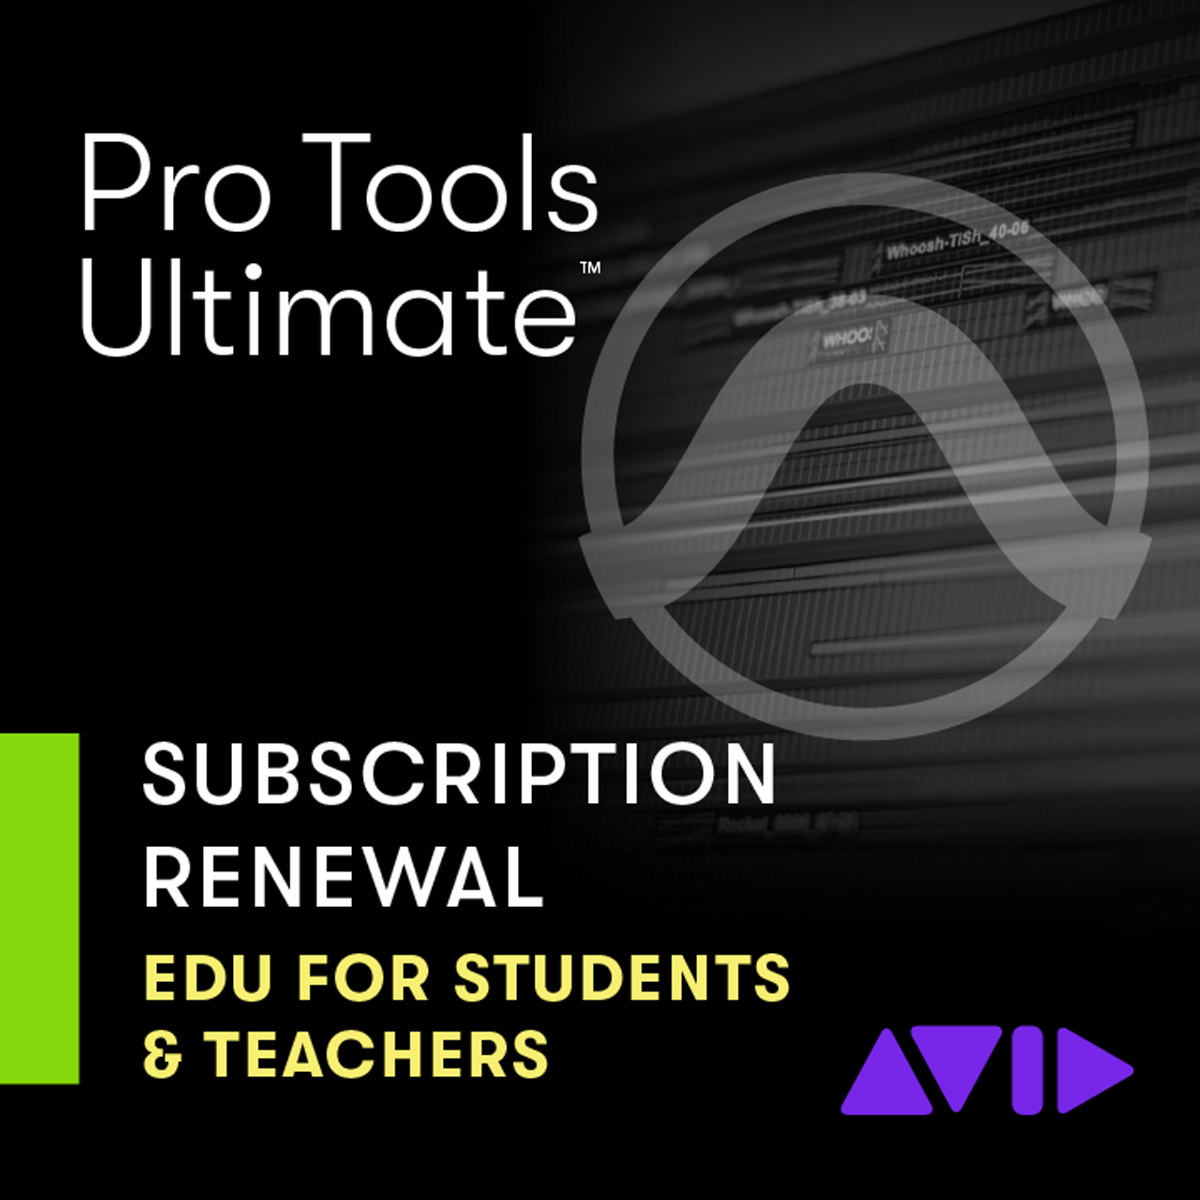 Avid Pro Tools Ultimate Renewal (Jahreslizenz-Verlängerung), EDU for Students/Teachers